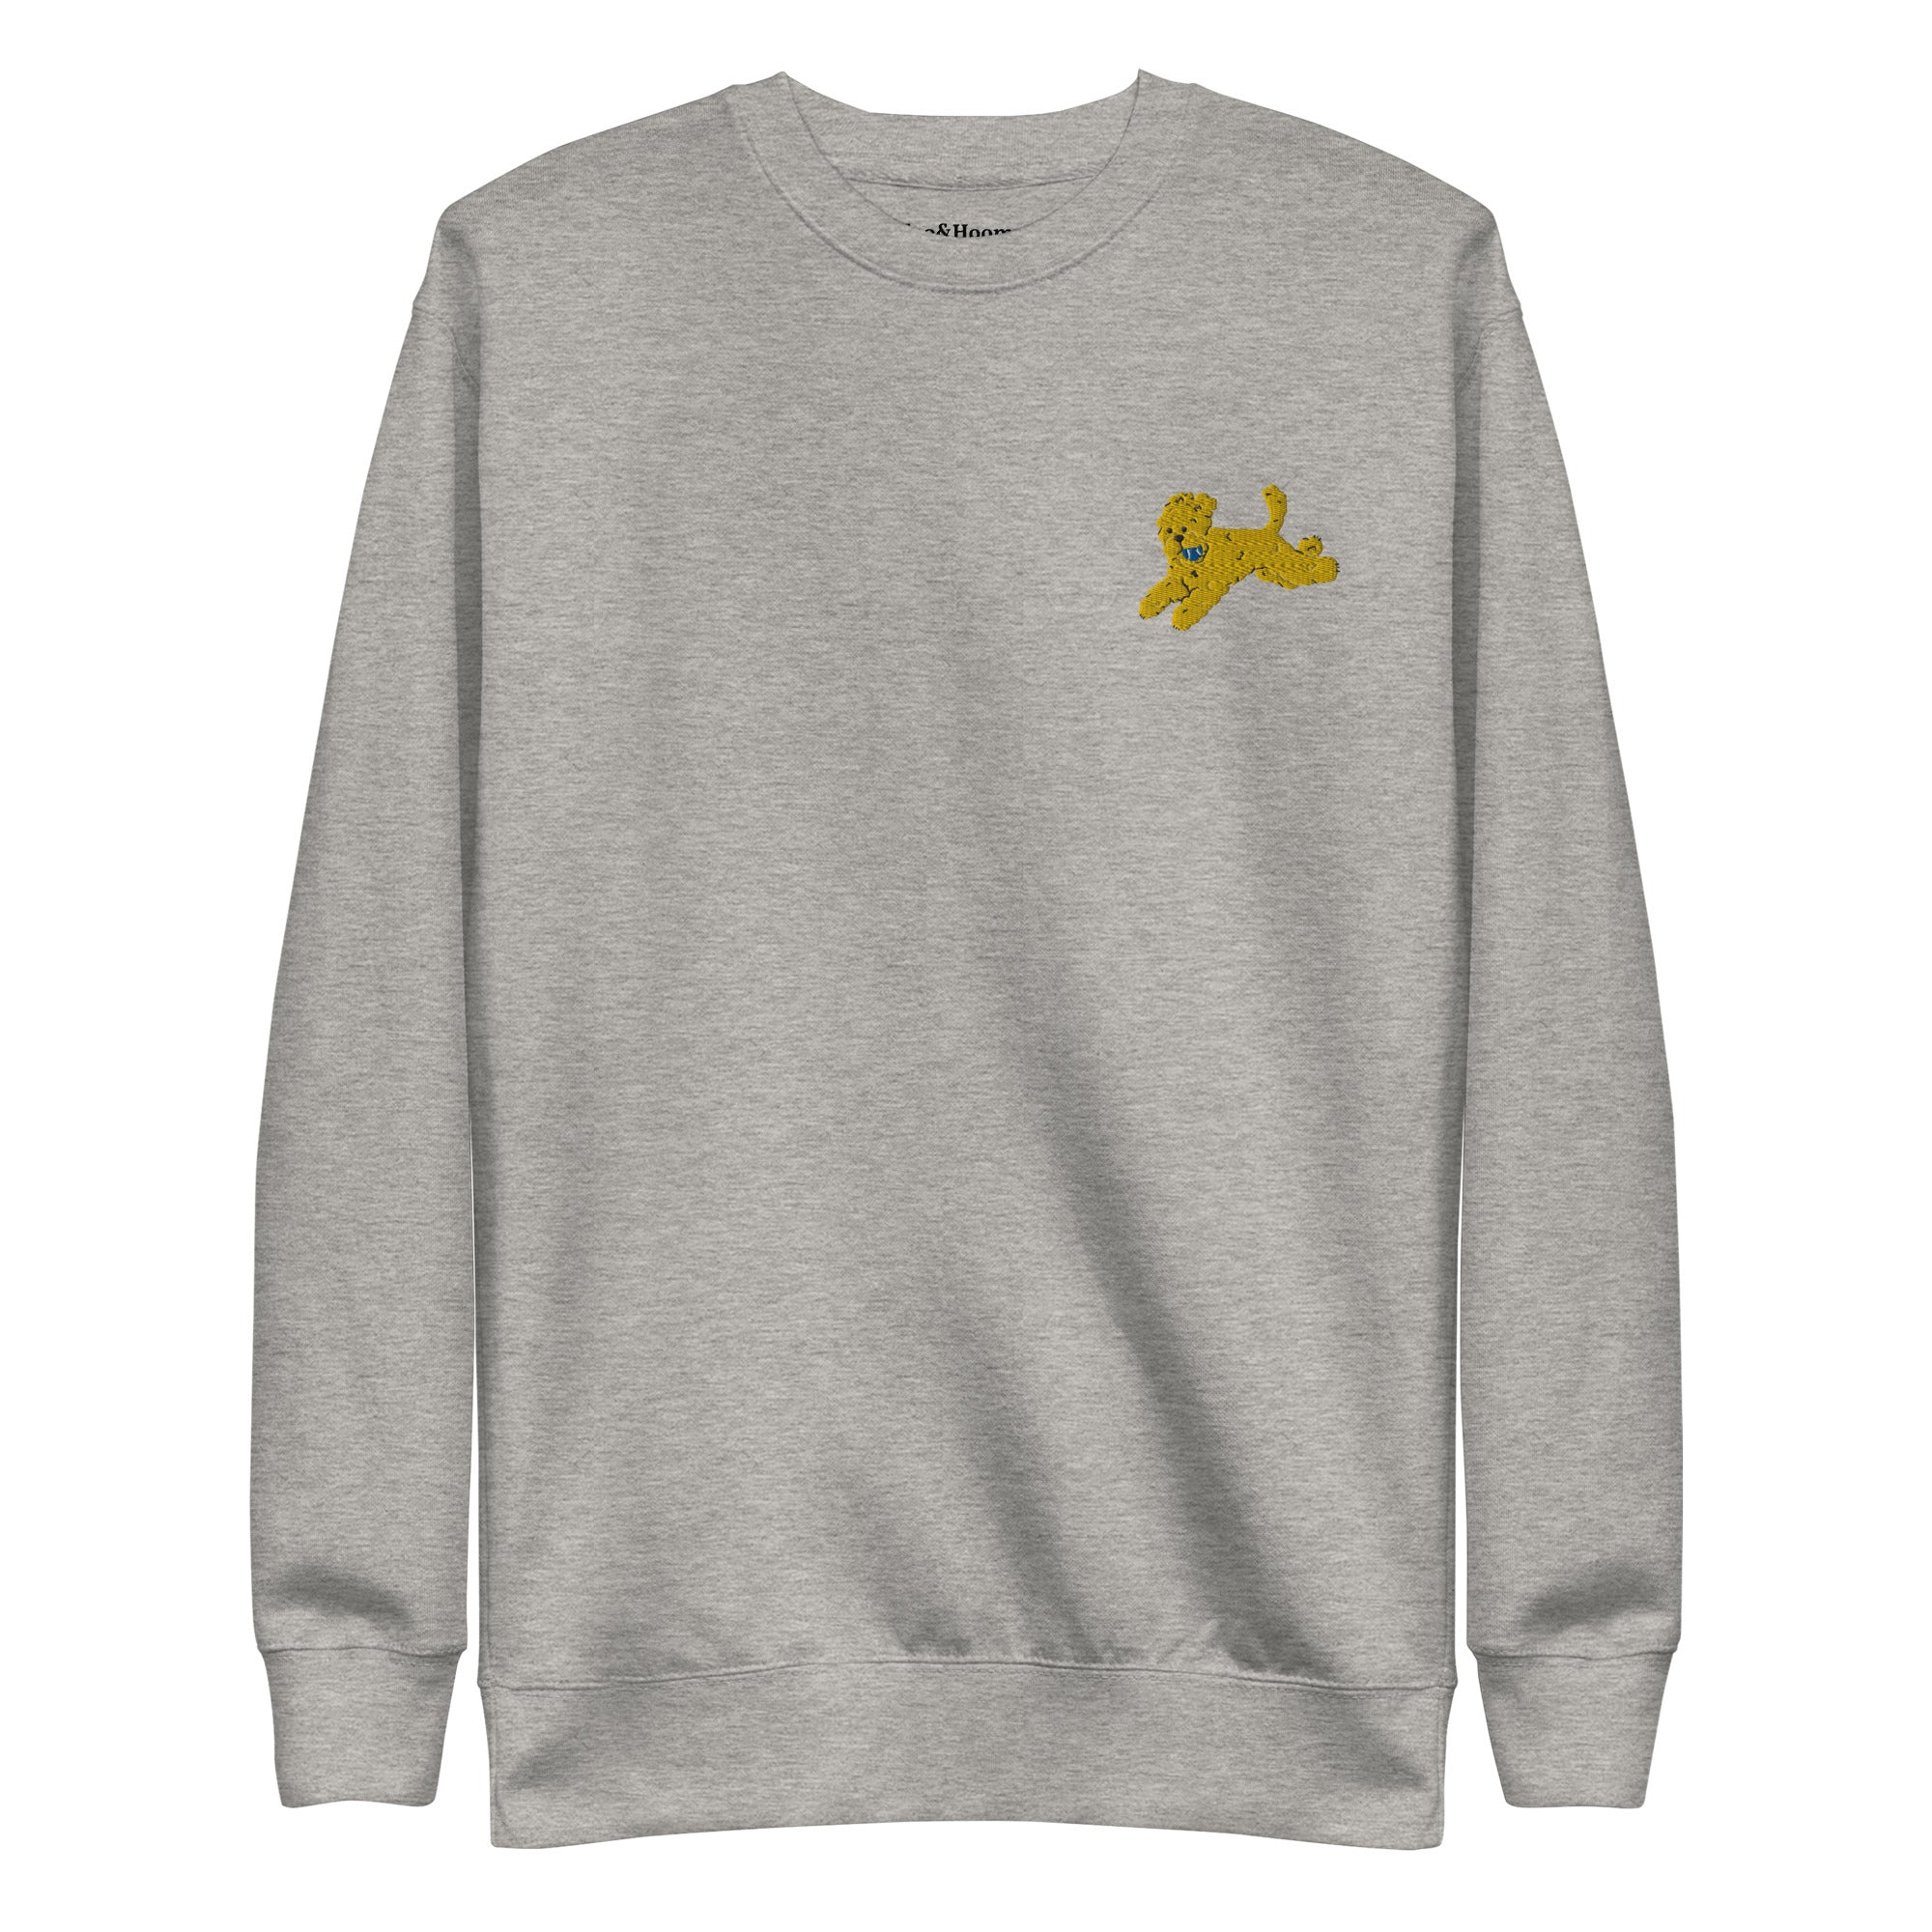 "Bear the Doodle" Unisex Premium Sweatshirt